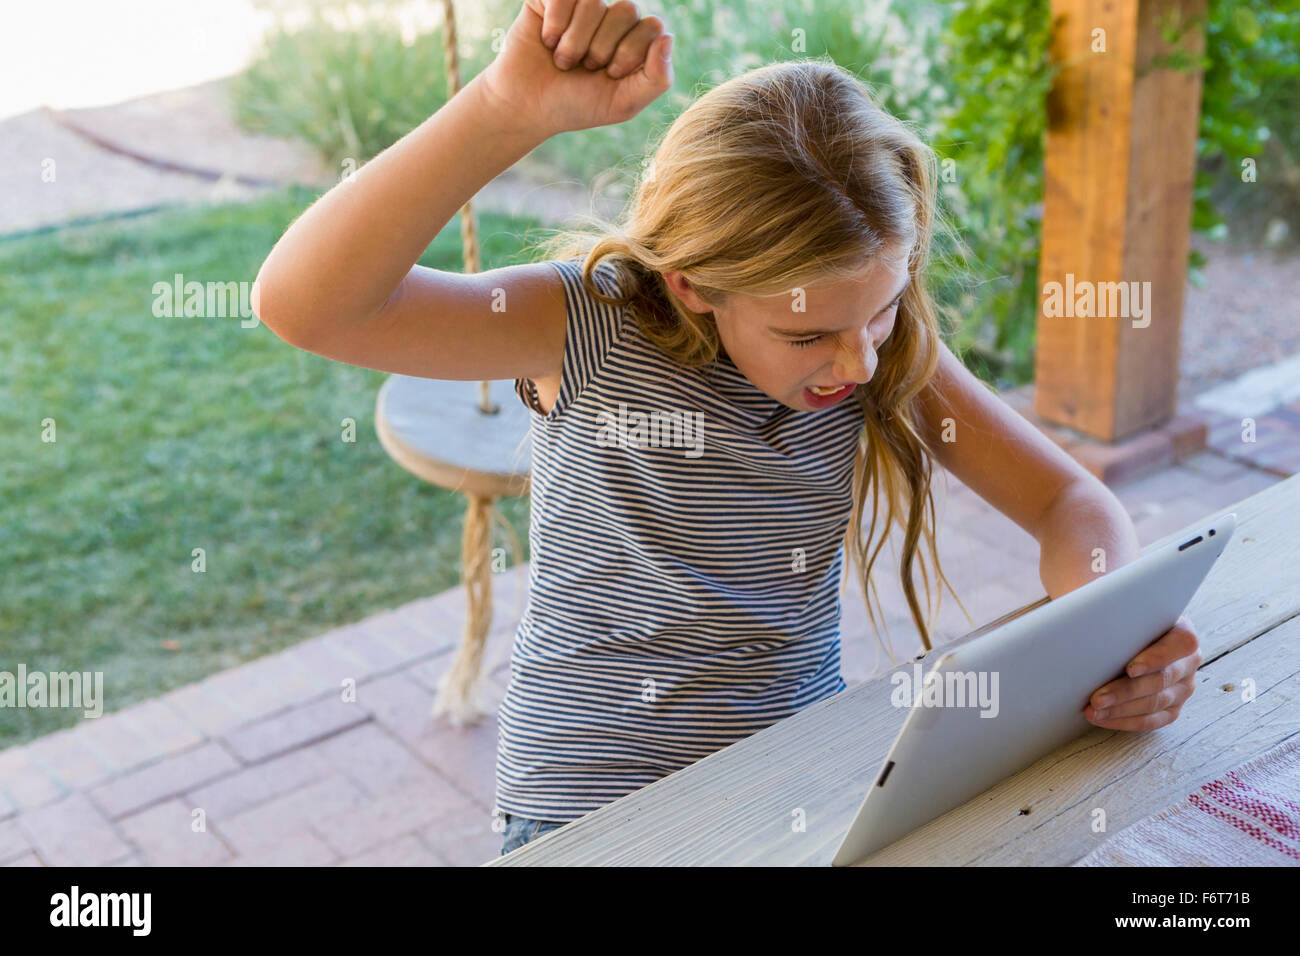 Caucasian girl cheering at digital tablet Stock Photo